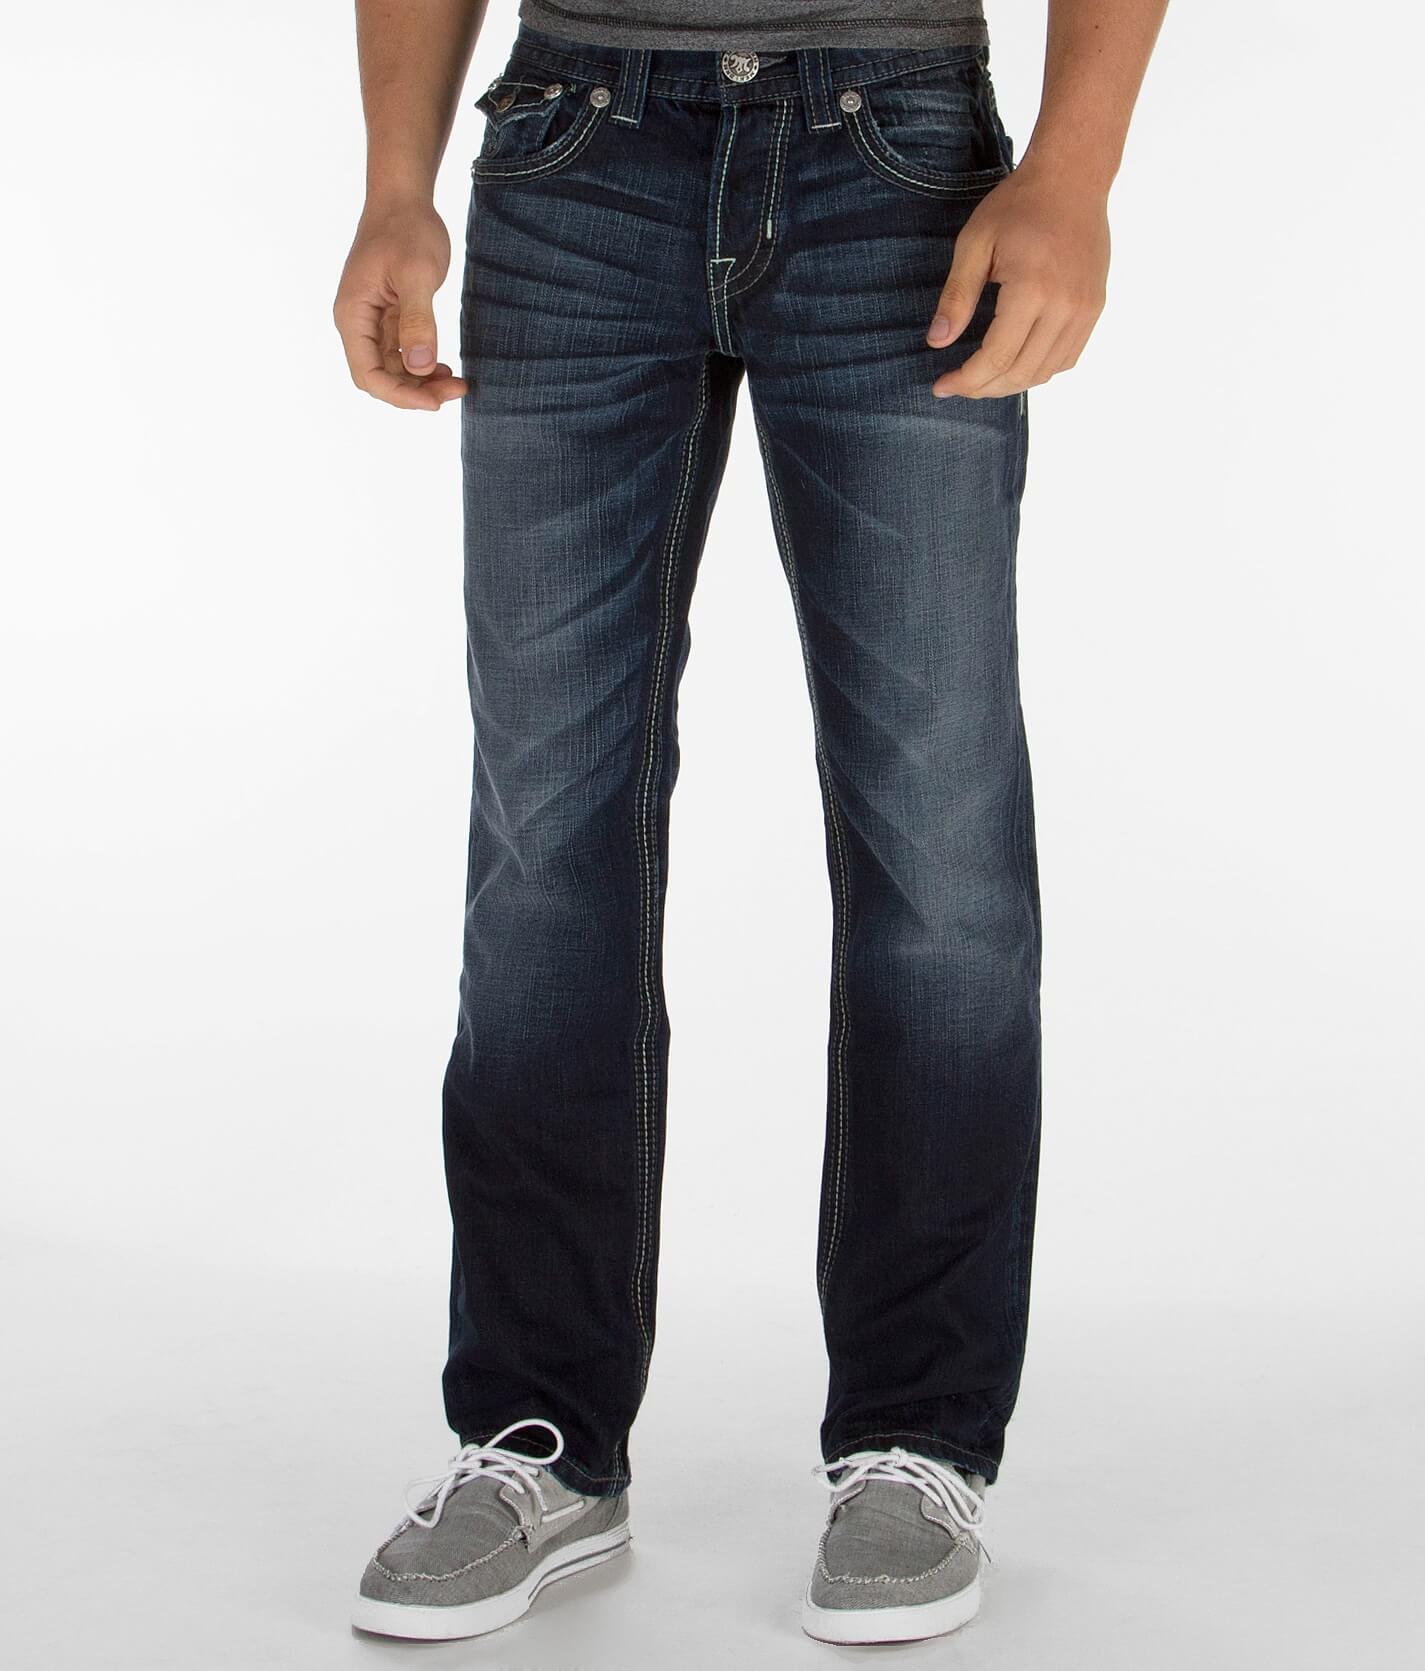 markham jeans